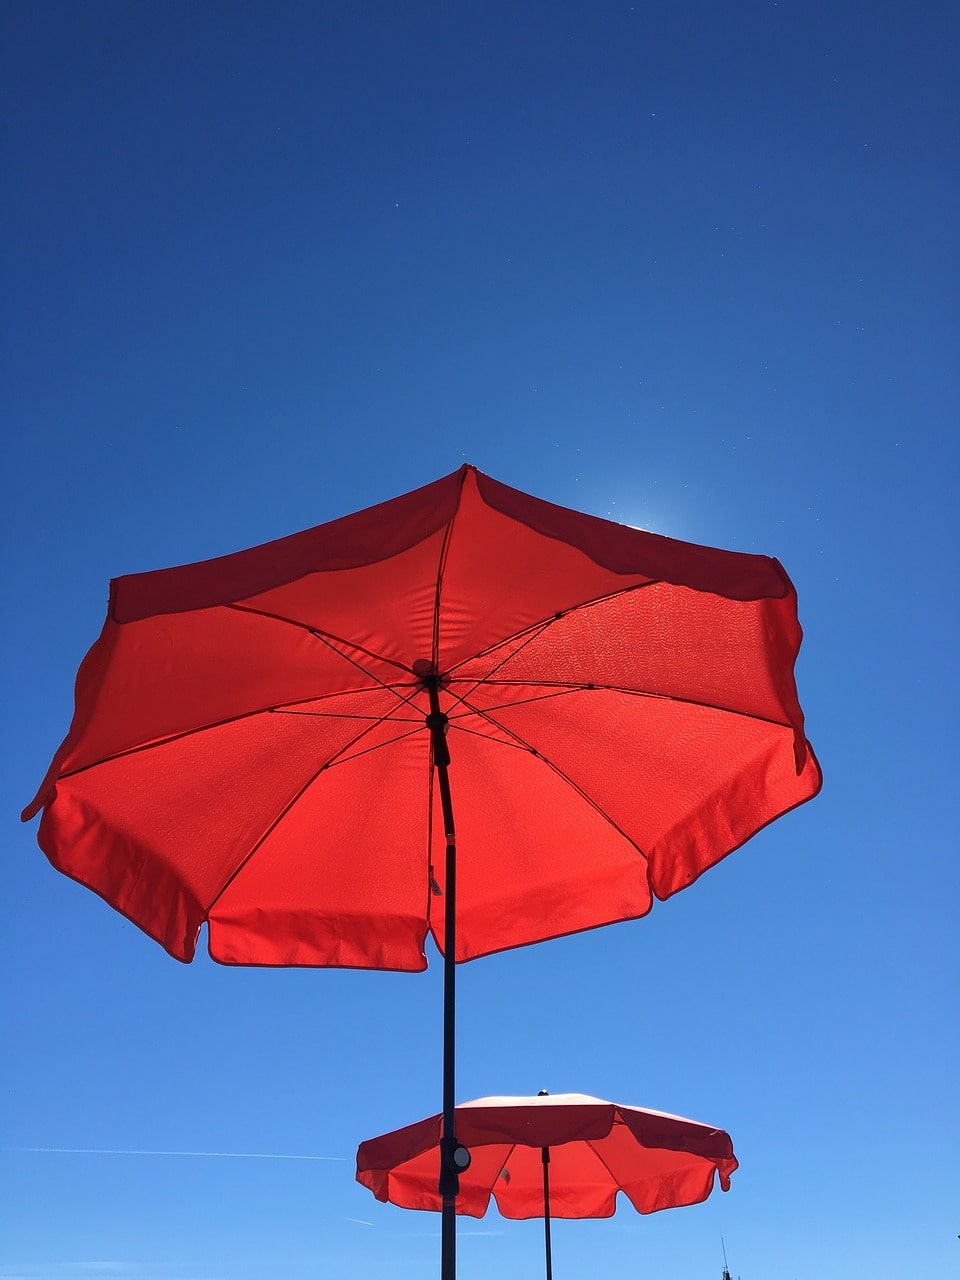 an umbrella under the sun